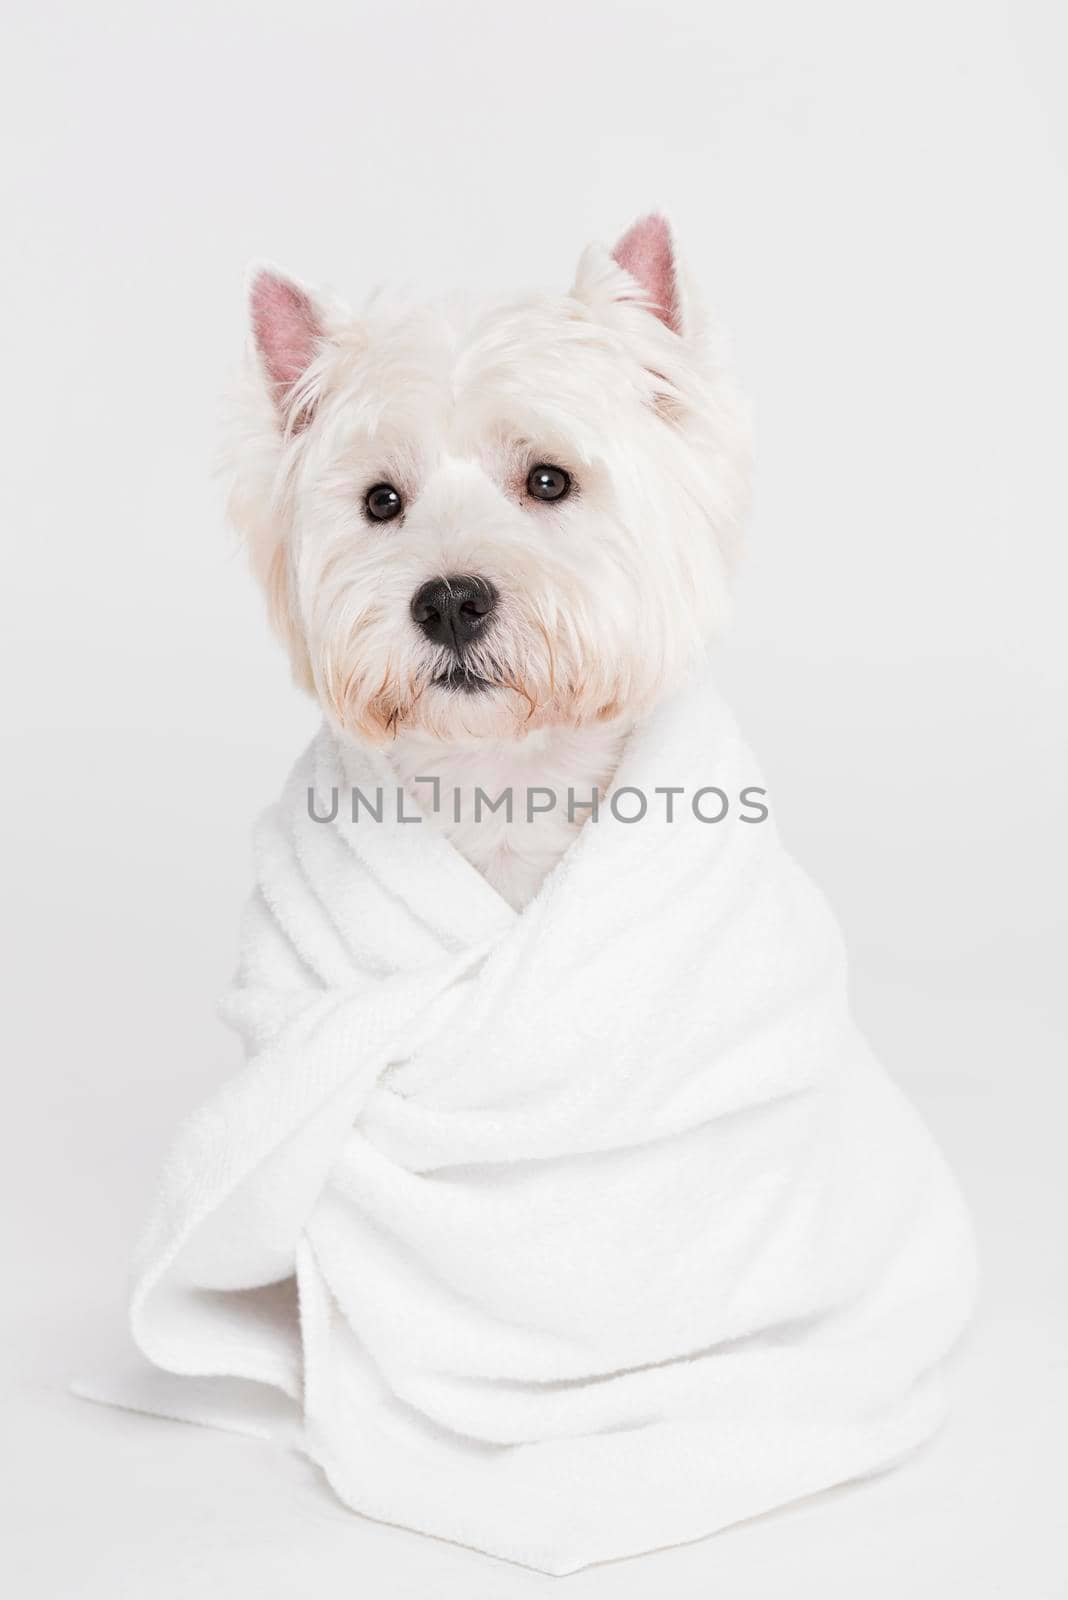 cute small dog sitting towel. High resolution photo